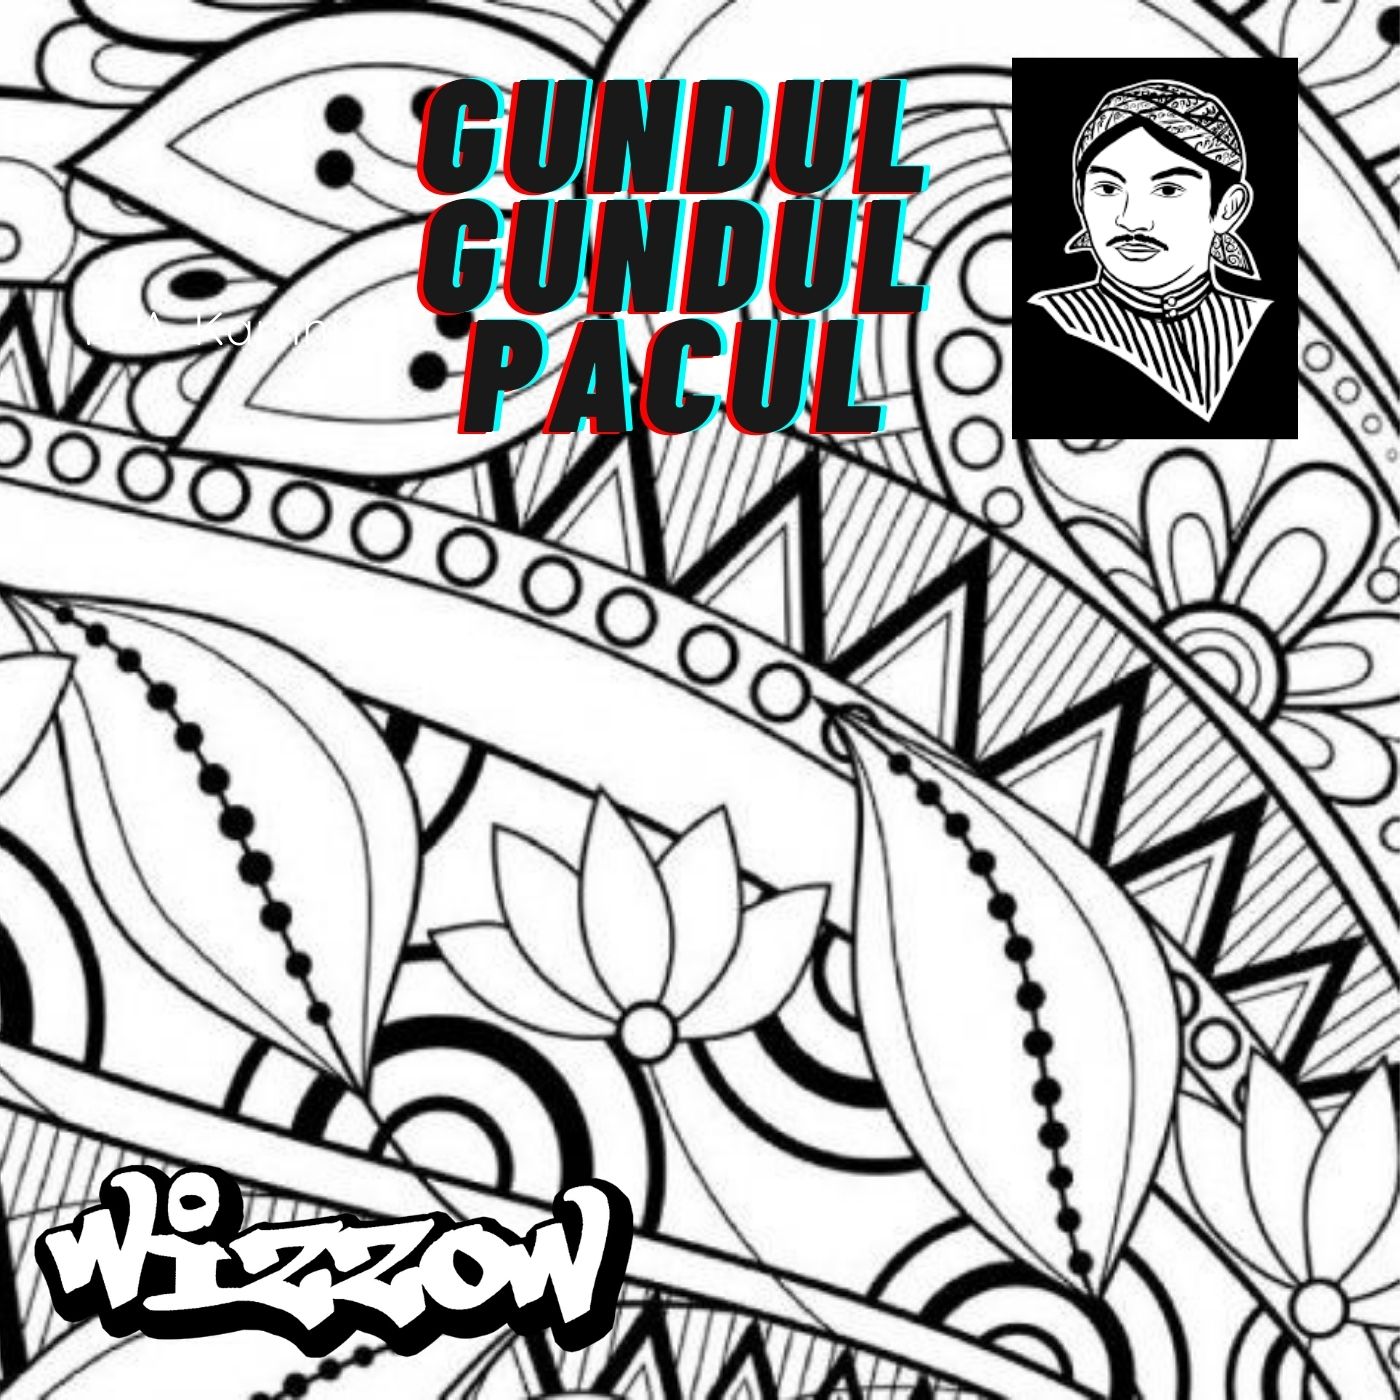 Gundul-Gundul Pacul by Wizzow